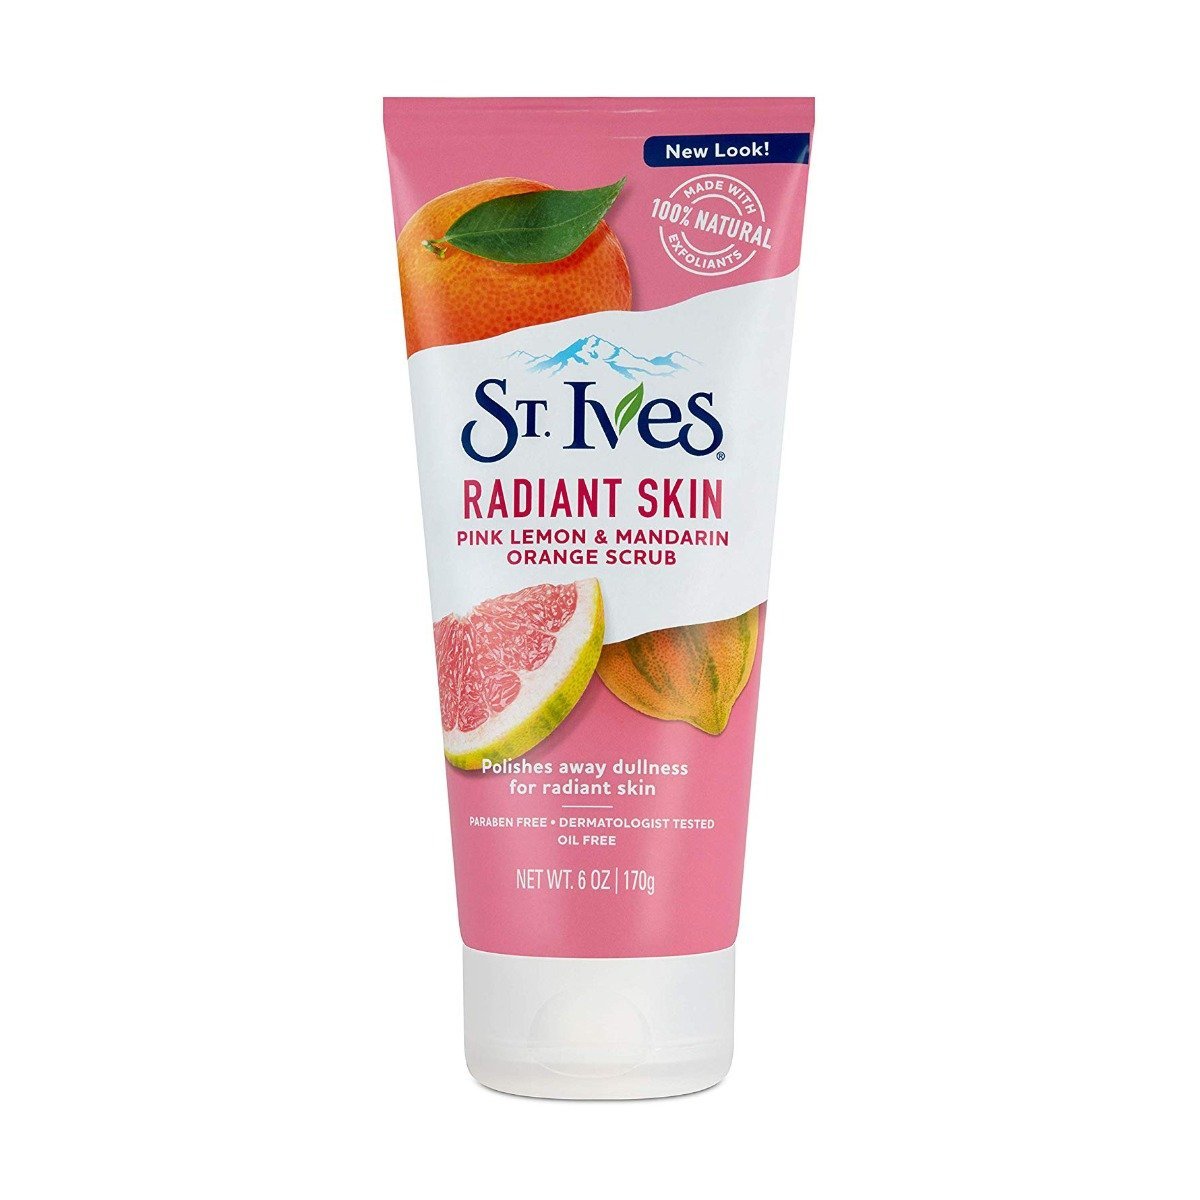 St. Ives Radiant Skin Pink Lemon & Mandarin Orange Scrub - 170gm - Bloom Pharmacy